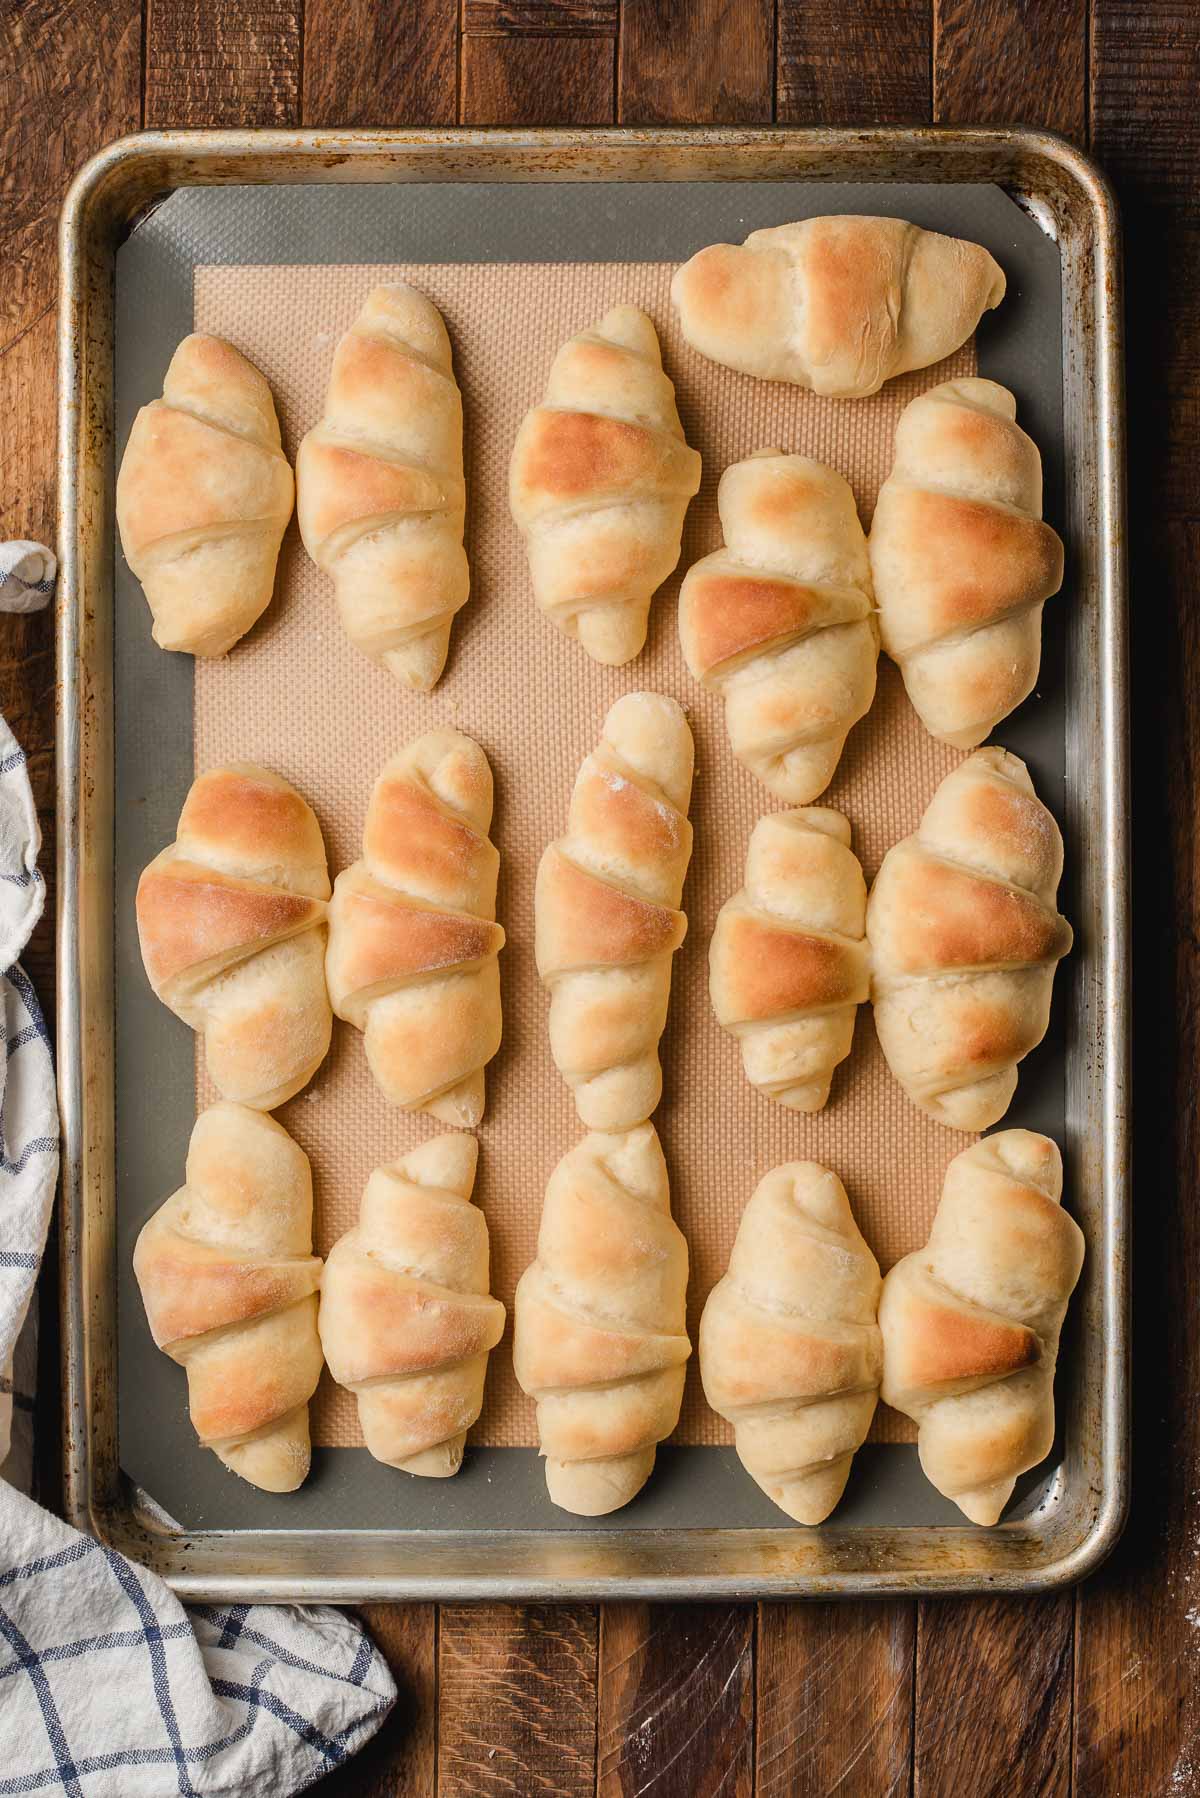 Freshly baked butterhorns dinner rolls on a baking sheet.